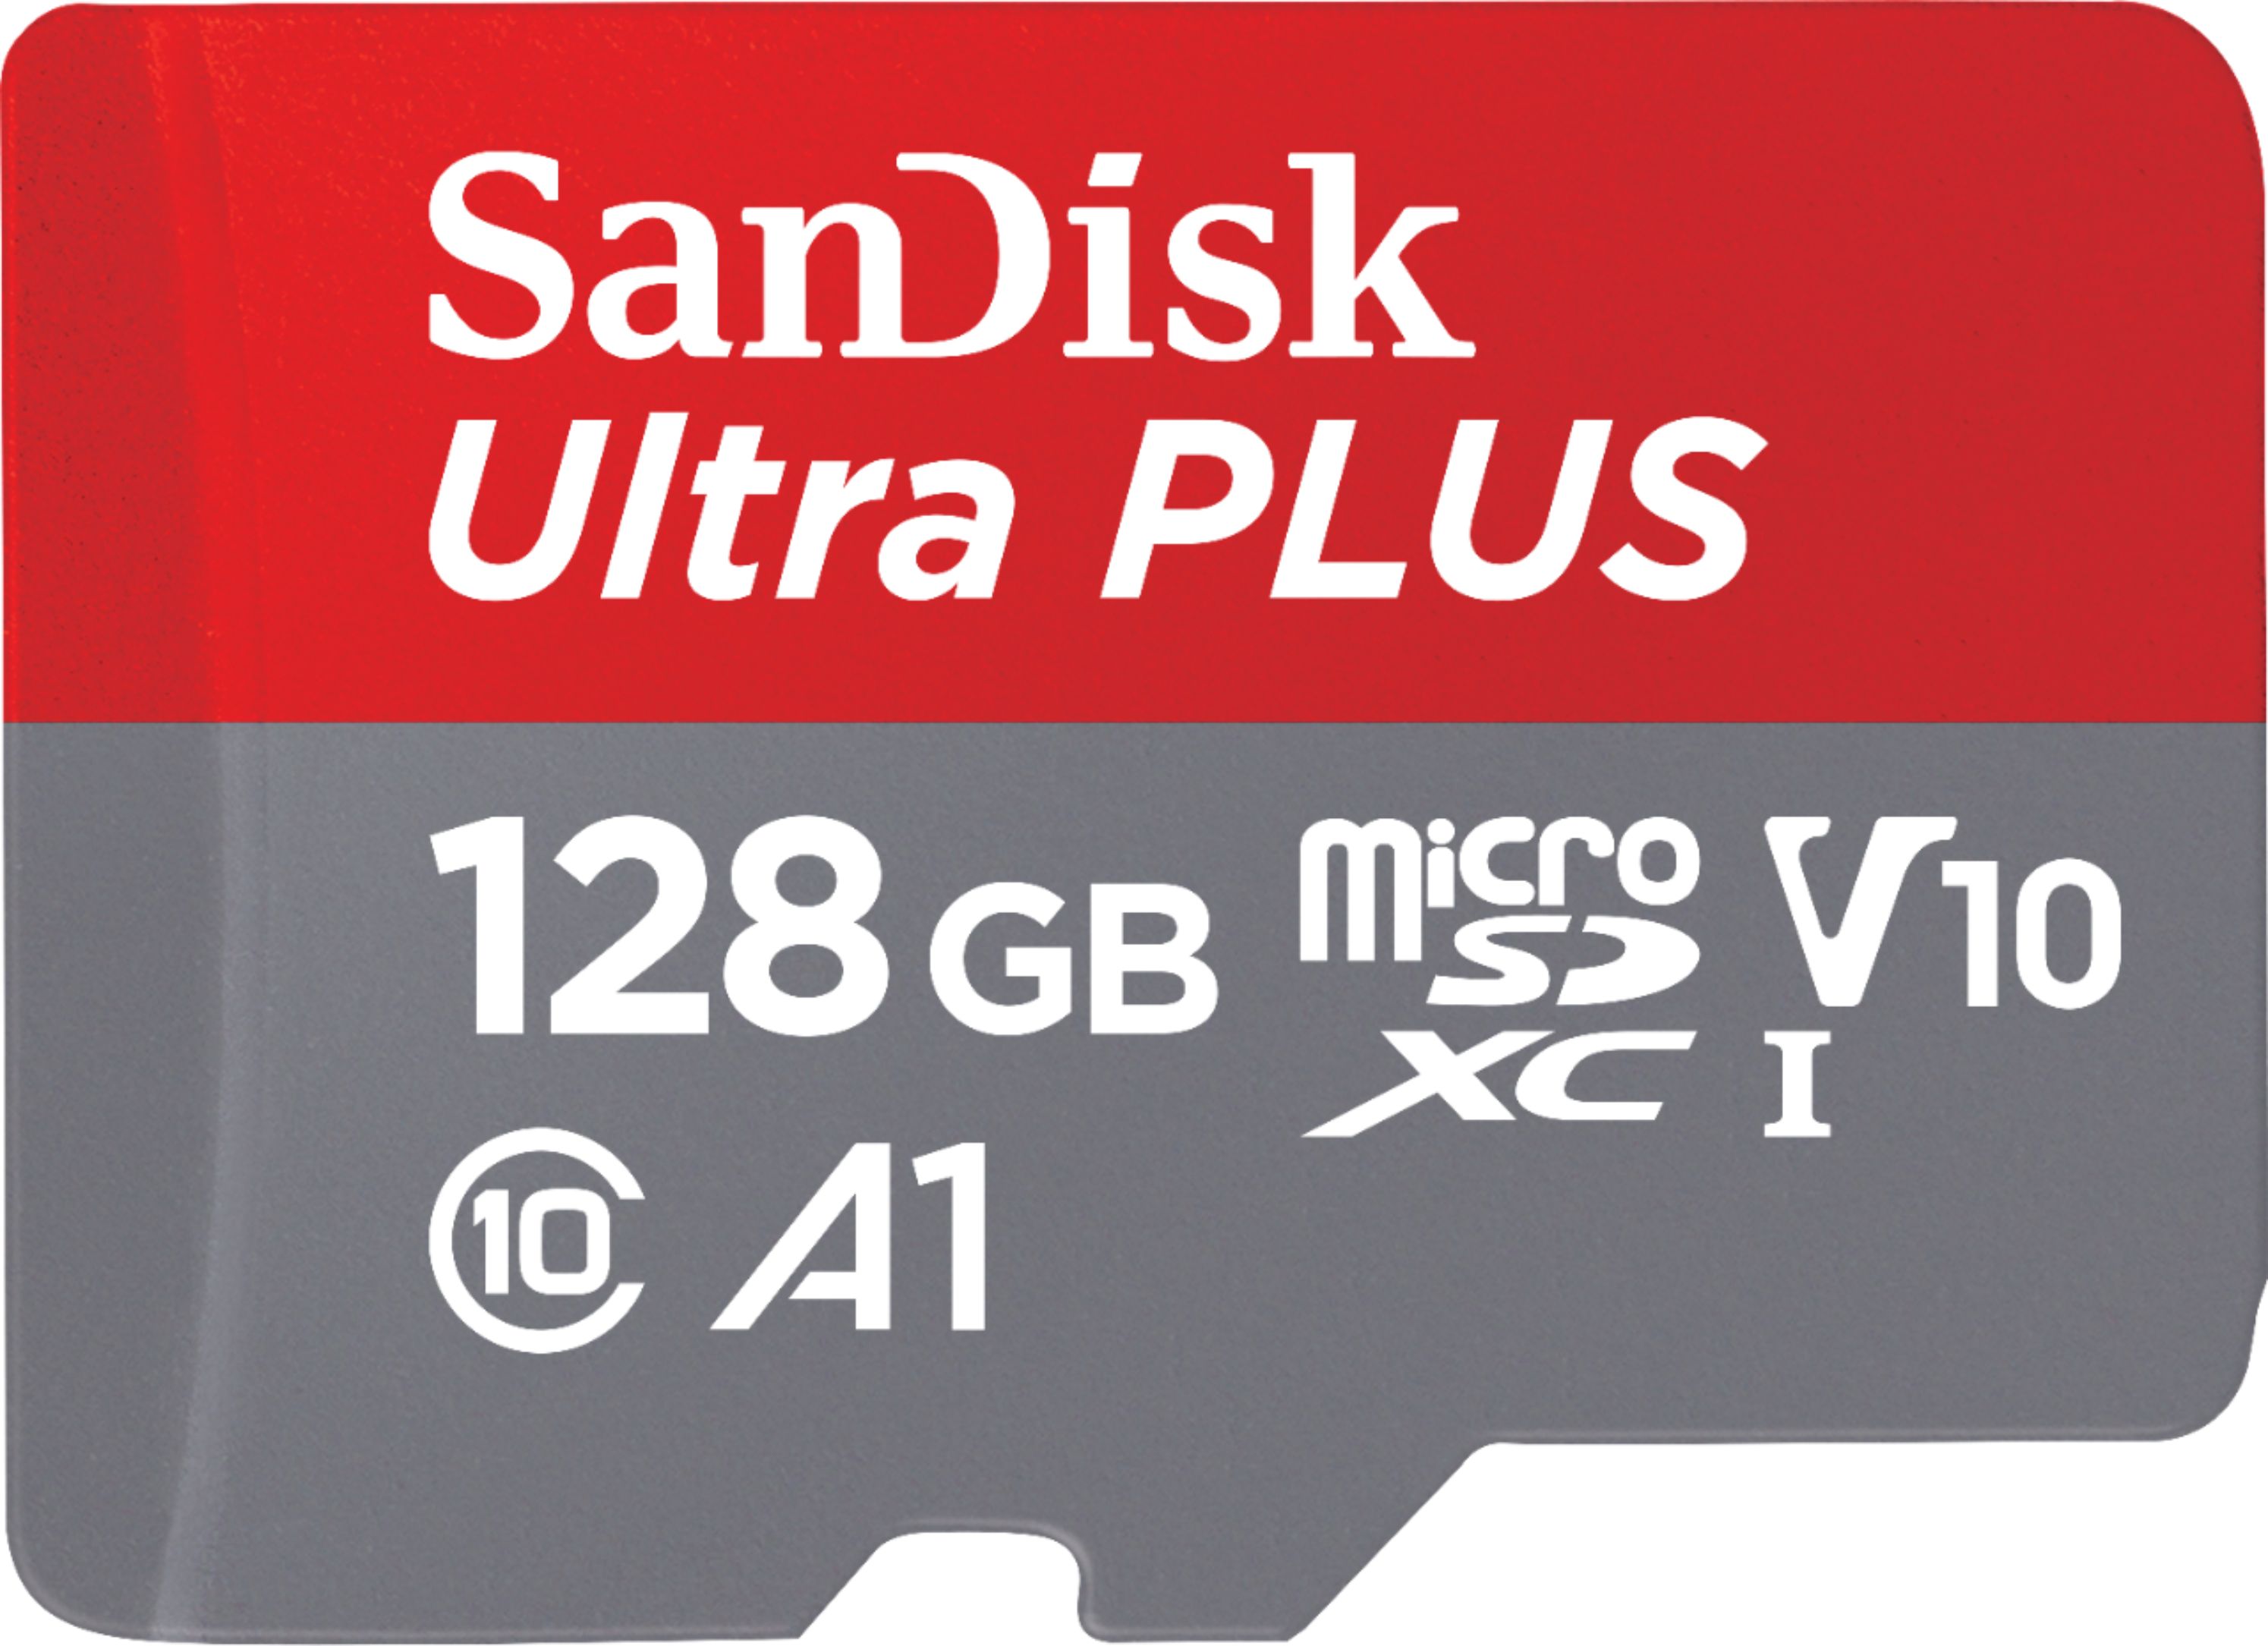 SanDisk - Ultra Plus 128GB microSDXC UHS-I Memory Card